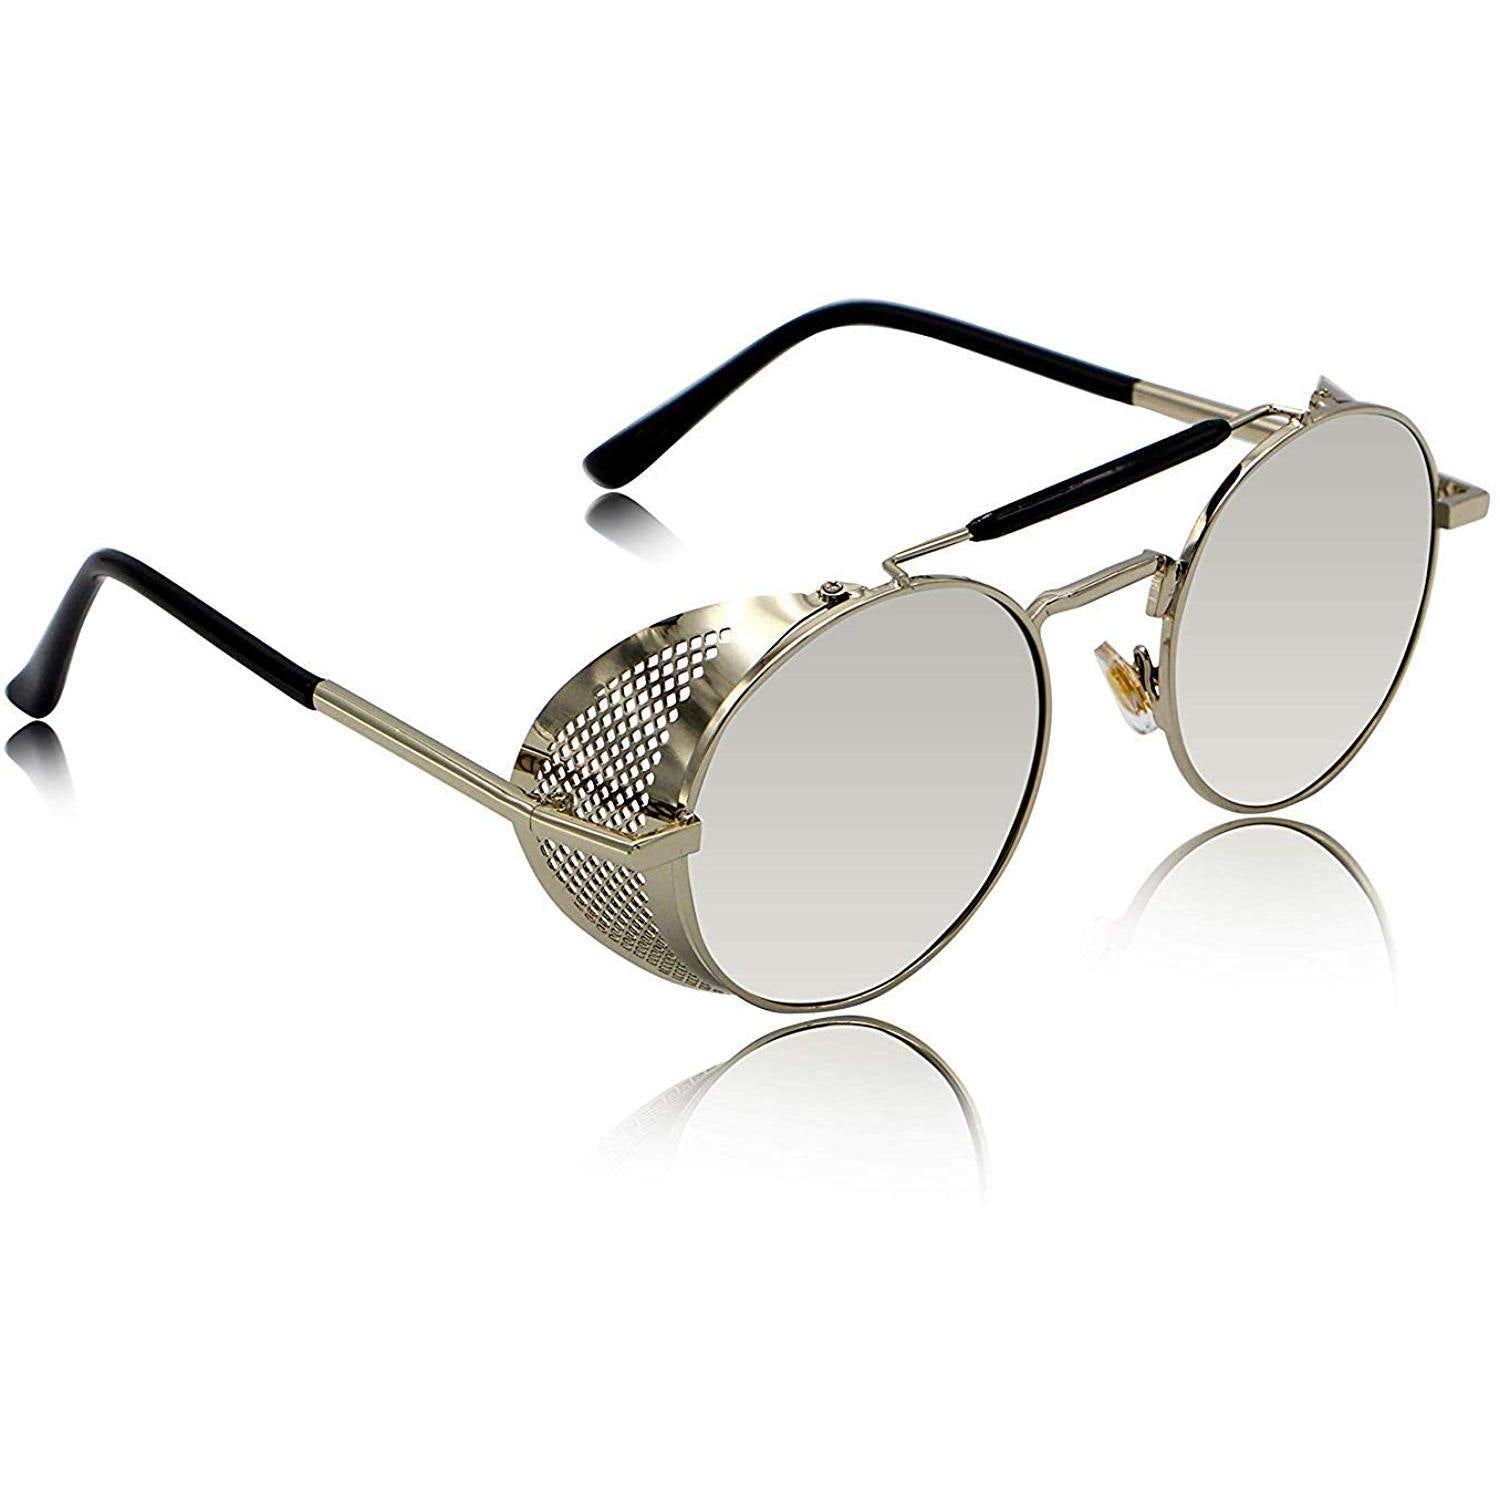 Dervin Retro Side Shield Round Unisex Sunglasses (Silver) - Dervin